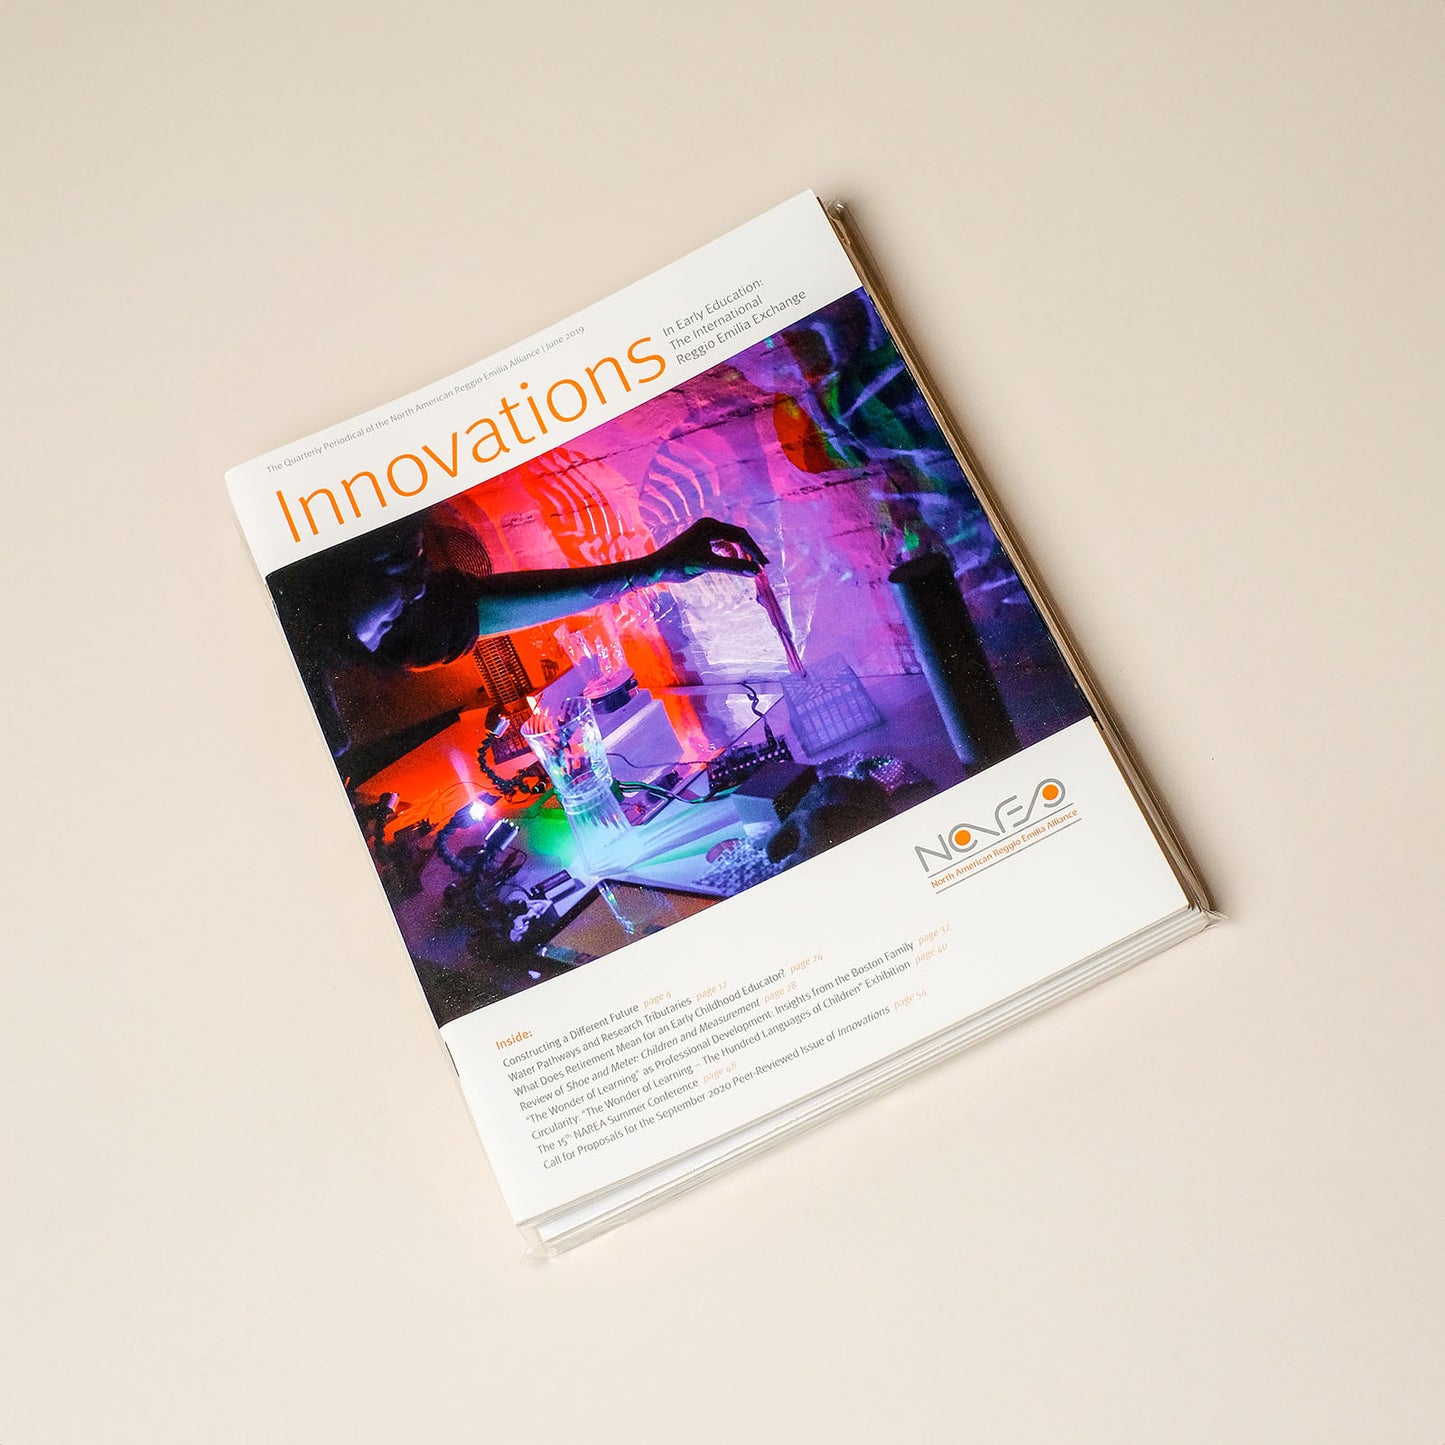 Innovations Volume 26, Number 2 | June 2019